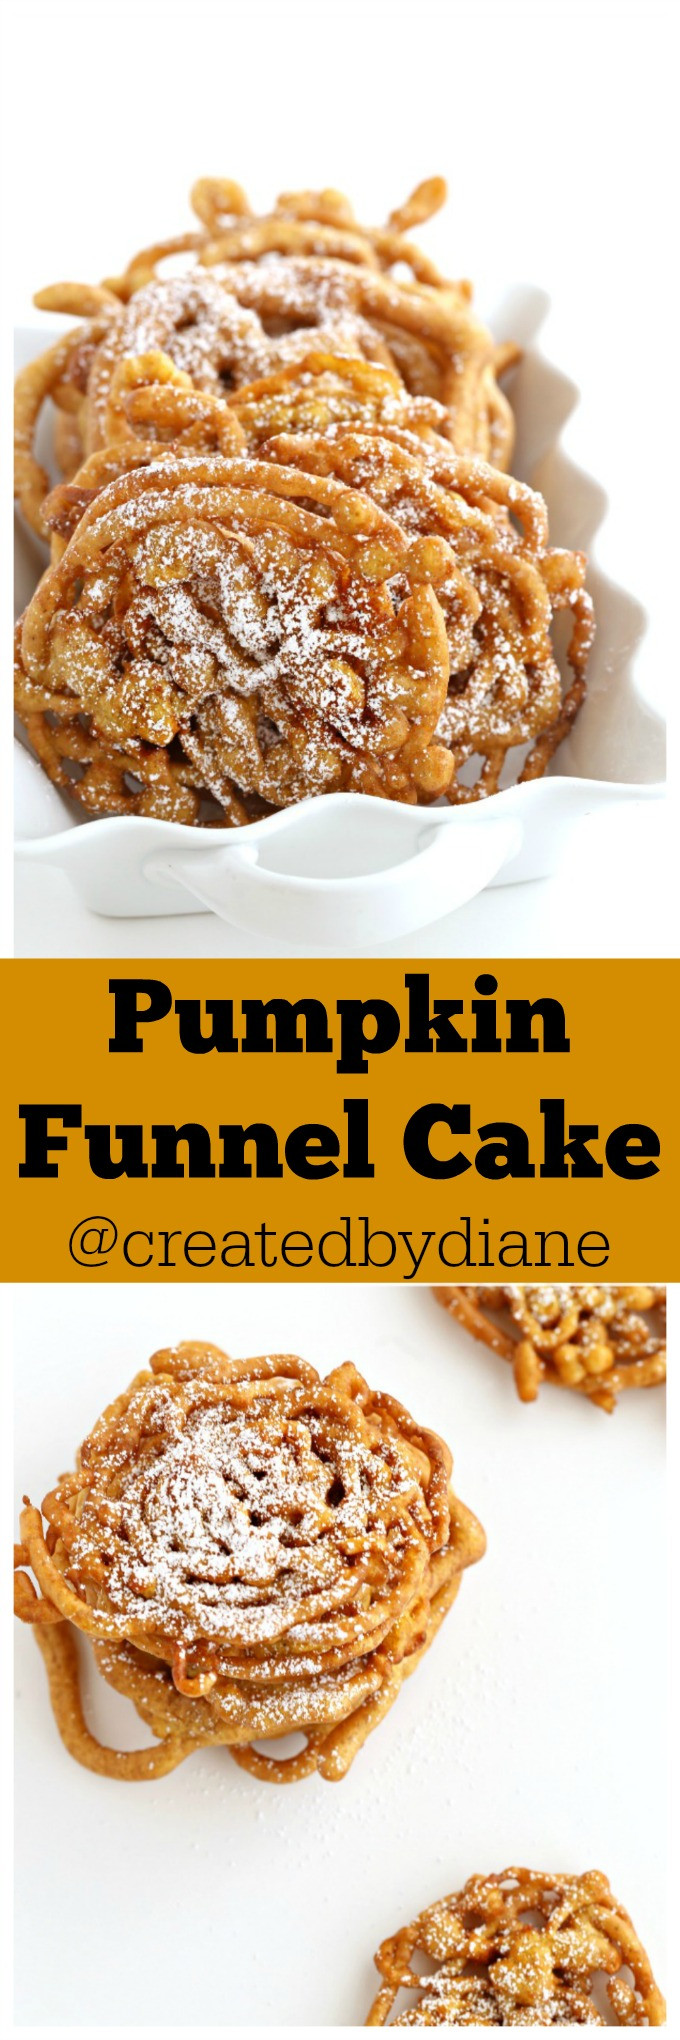 Fall Desserts 2019
 Pumpkin Funnel Cake A fall dessert idea